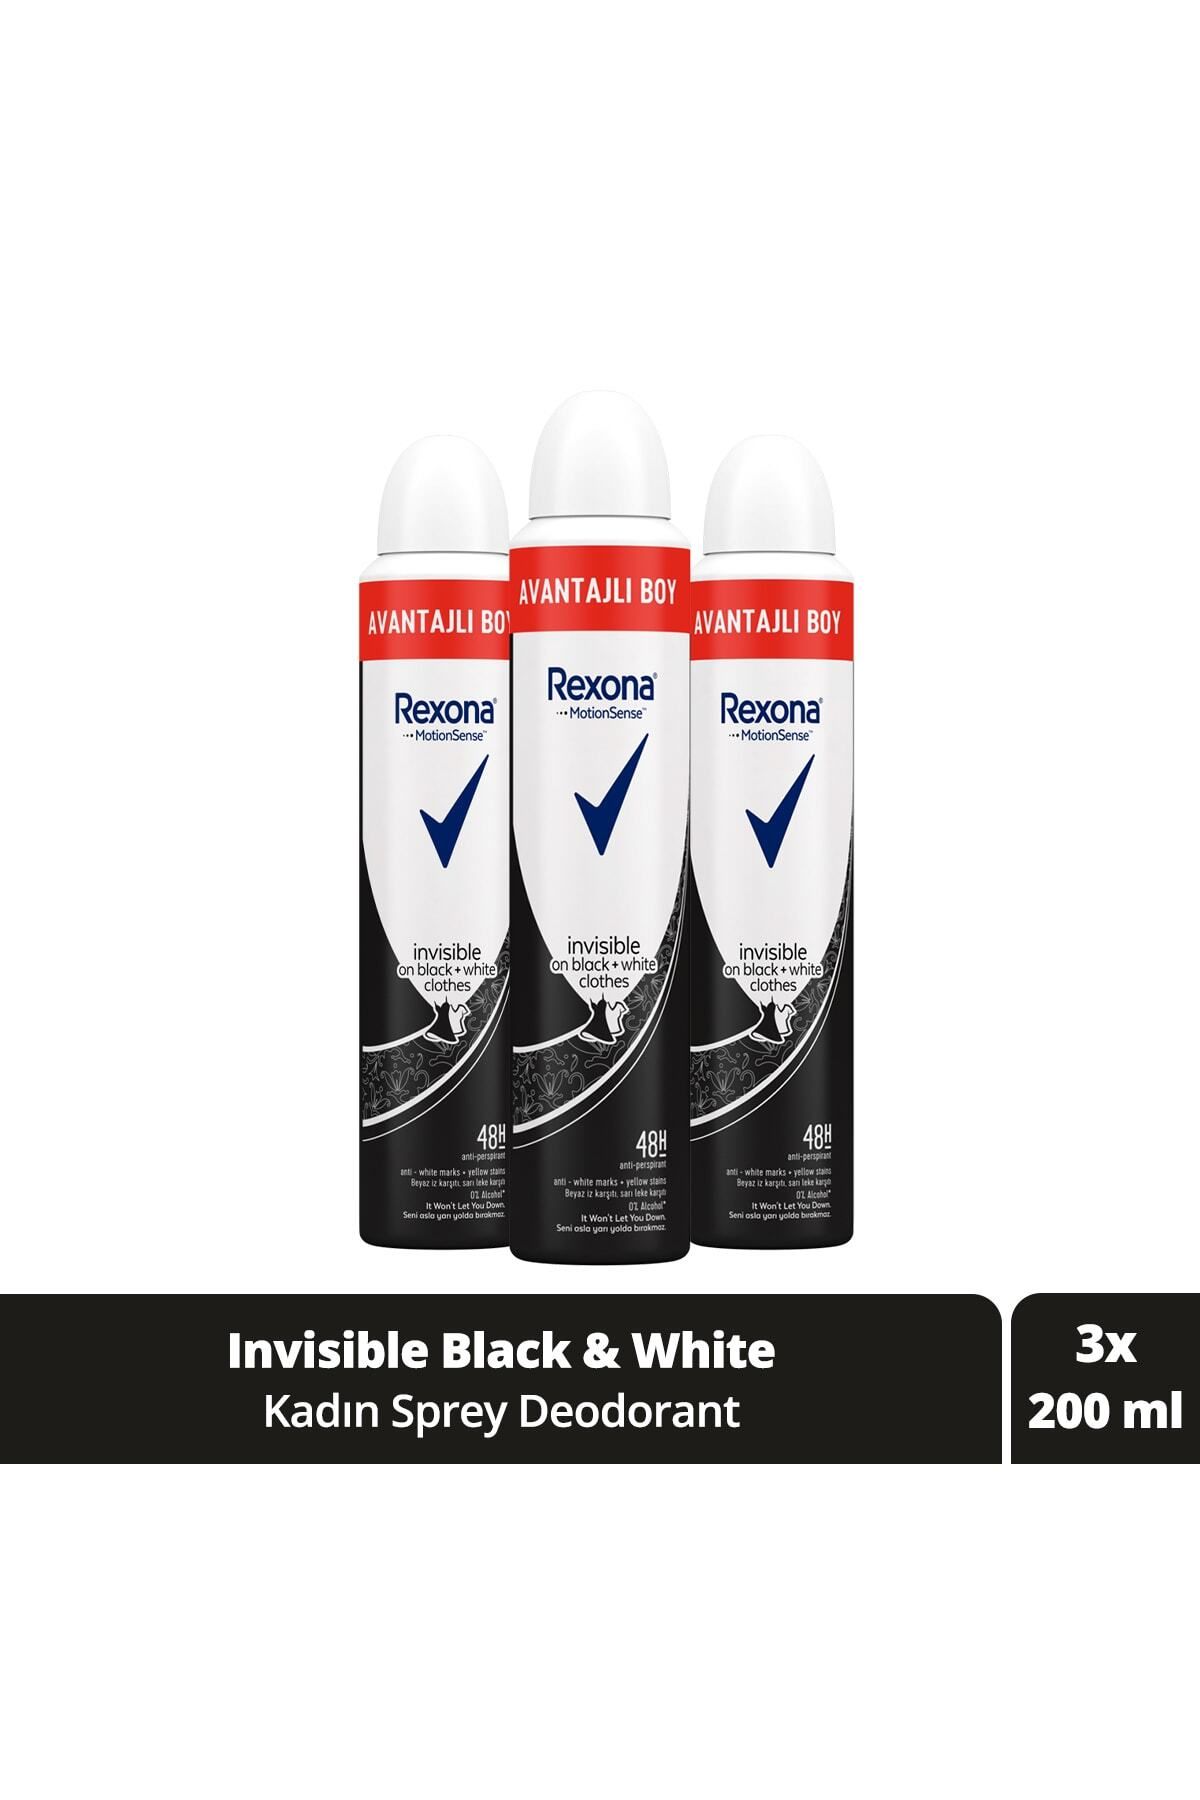 Rexona Kadın Sprey Deodorant Invisible On Black White Clothes Avantajlı Boy 200 ml X3 Adet